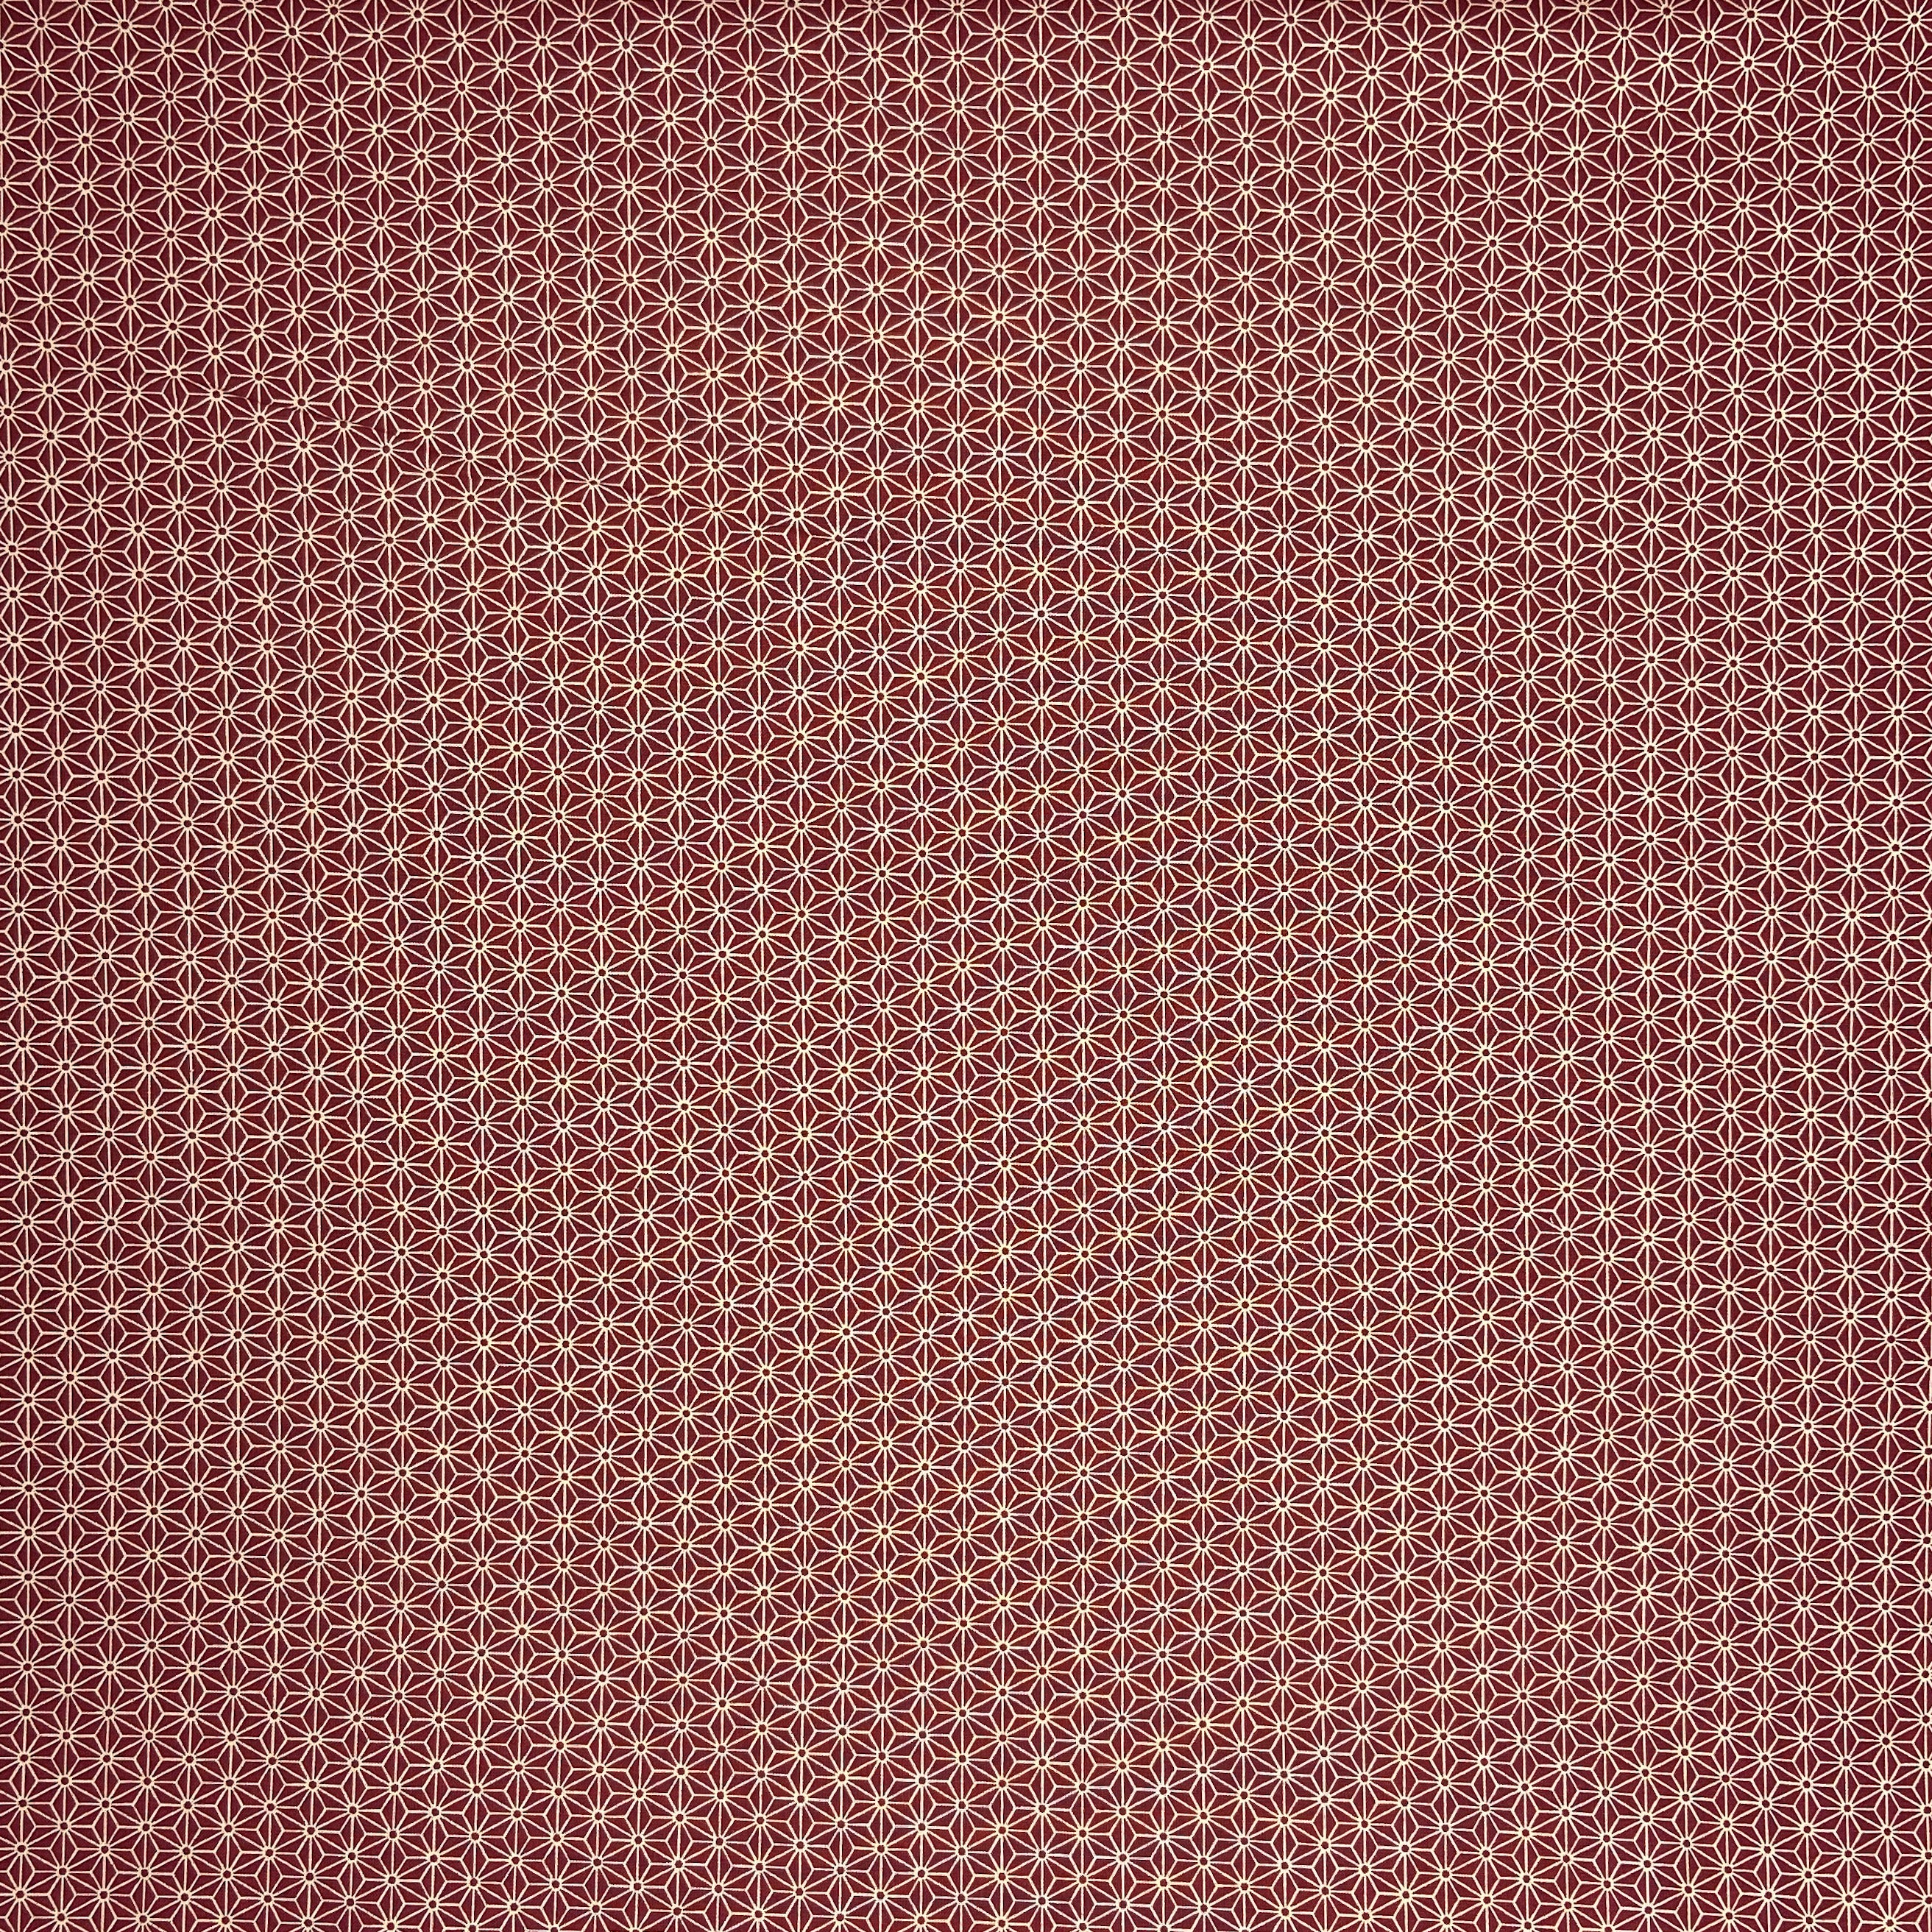 Japanese Cotton Sheeting Print - Hemp Leaves Red